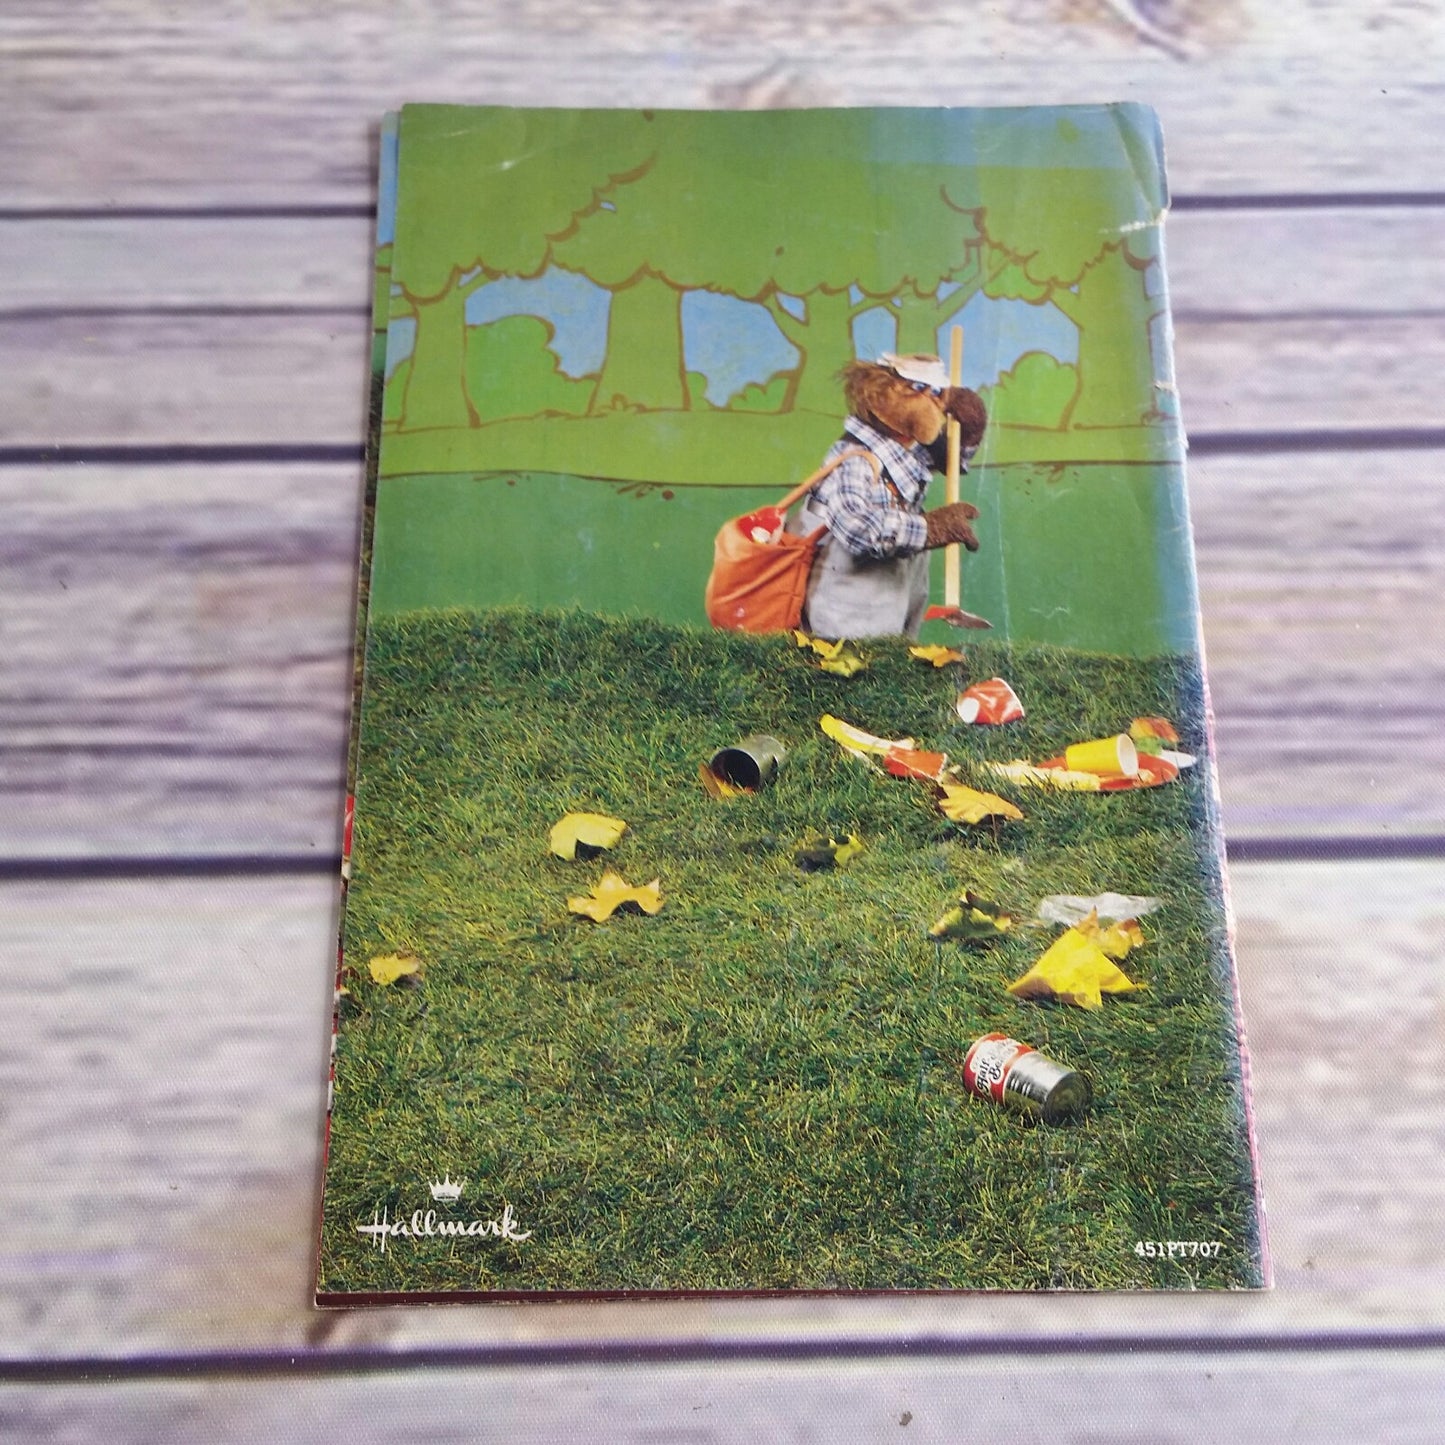 Jim Henson's Muppet Picnic Cookbook Pamphlet Hallmark Cards Puppet Show 1981